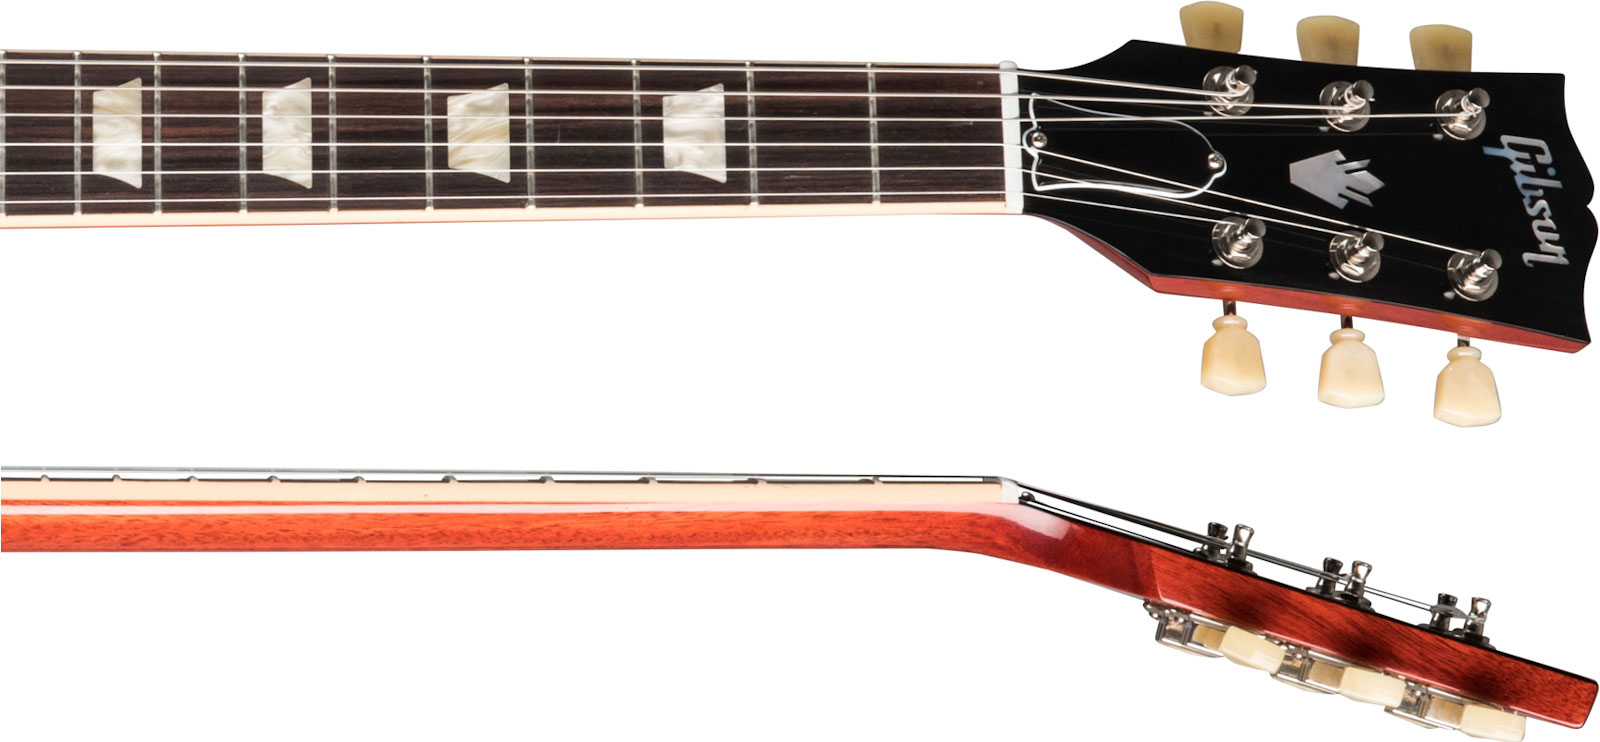 Gibson Sg Standard '61 Sideways Vibrola Original 2h Ht Rw - Vintage Cherry - Retro rock electric guitar - Variation 3